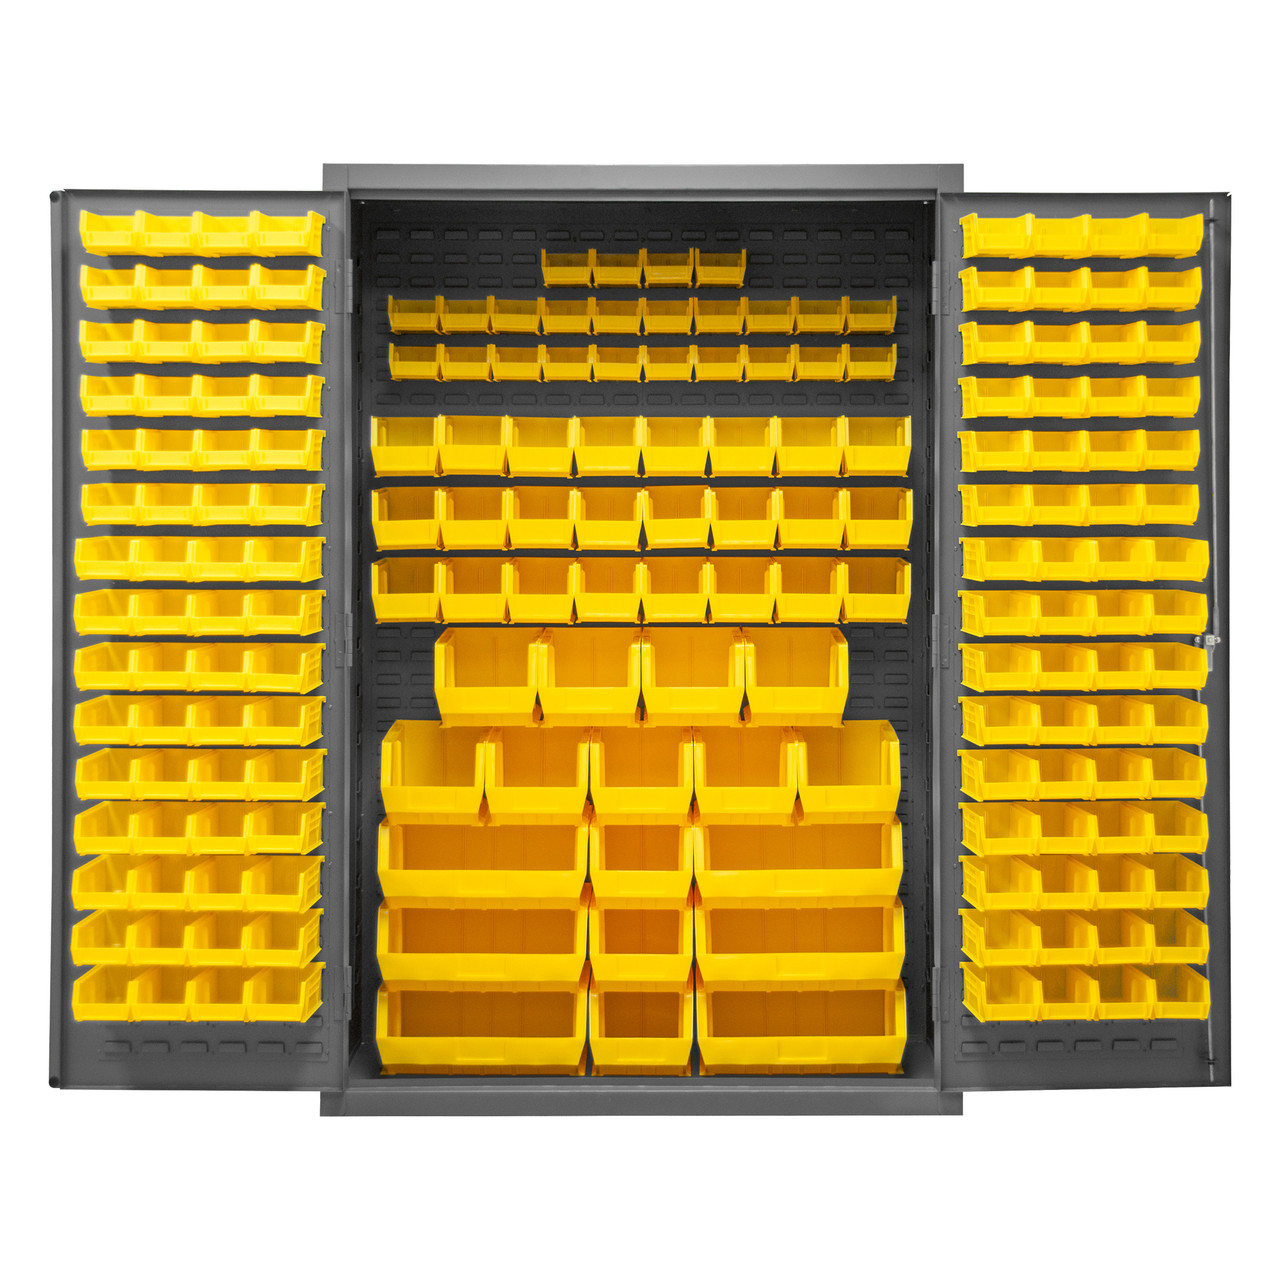 Plastic Bin Storage Cabinets